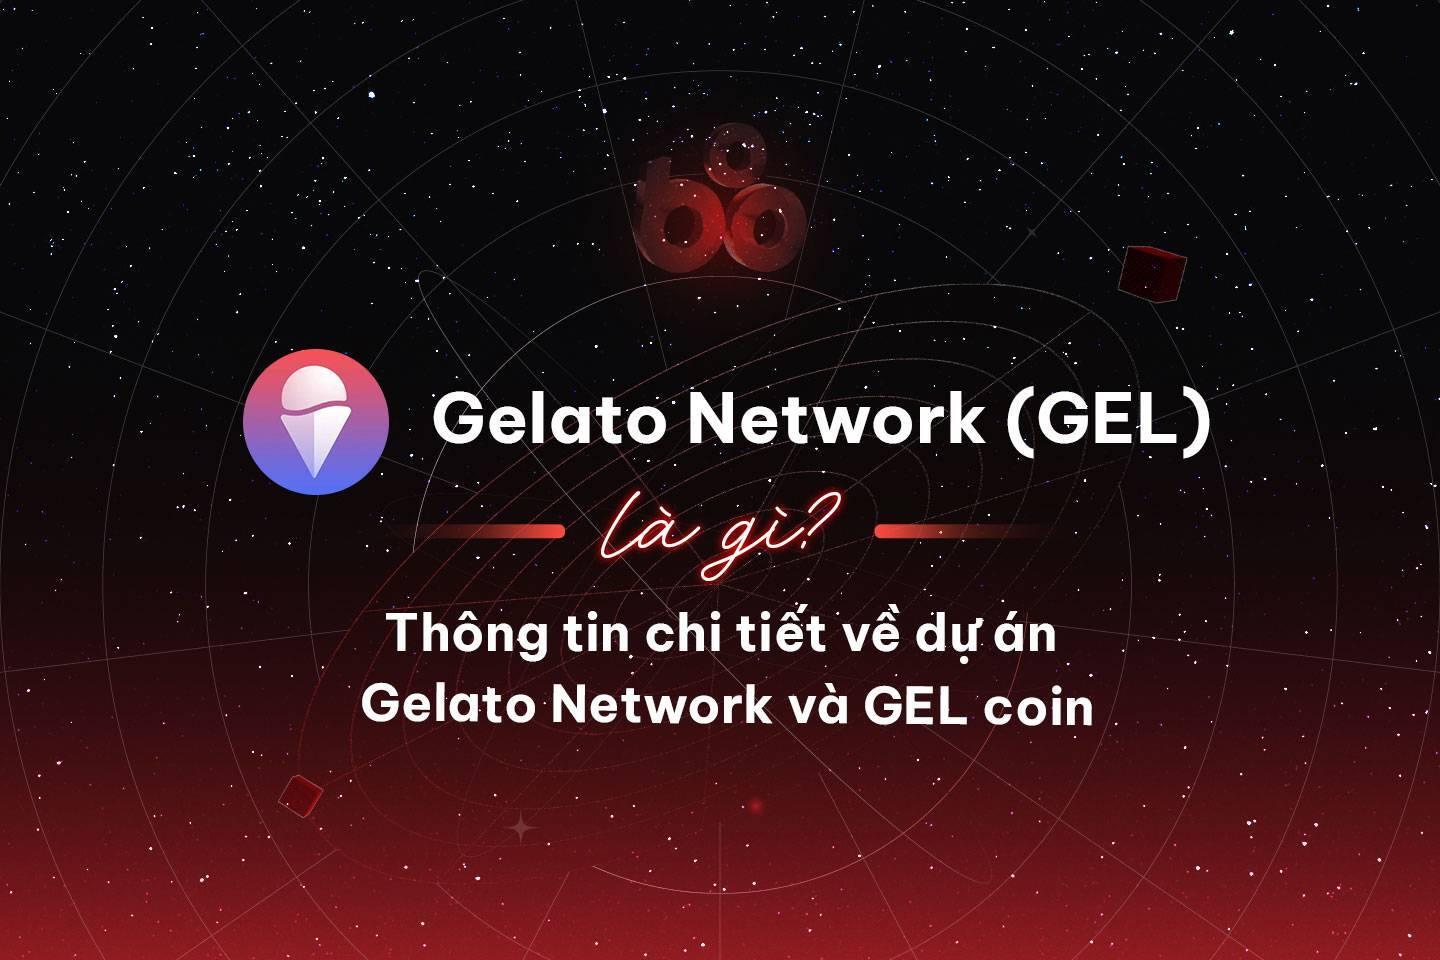 gelato-network-gel-la-gi-thong-tin-chi-tiet-ve-du-an-gelato-network-va-gel-coin